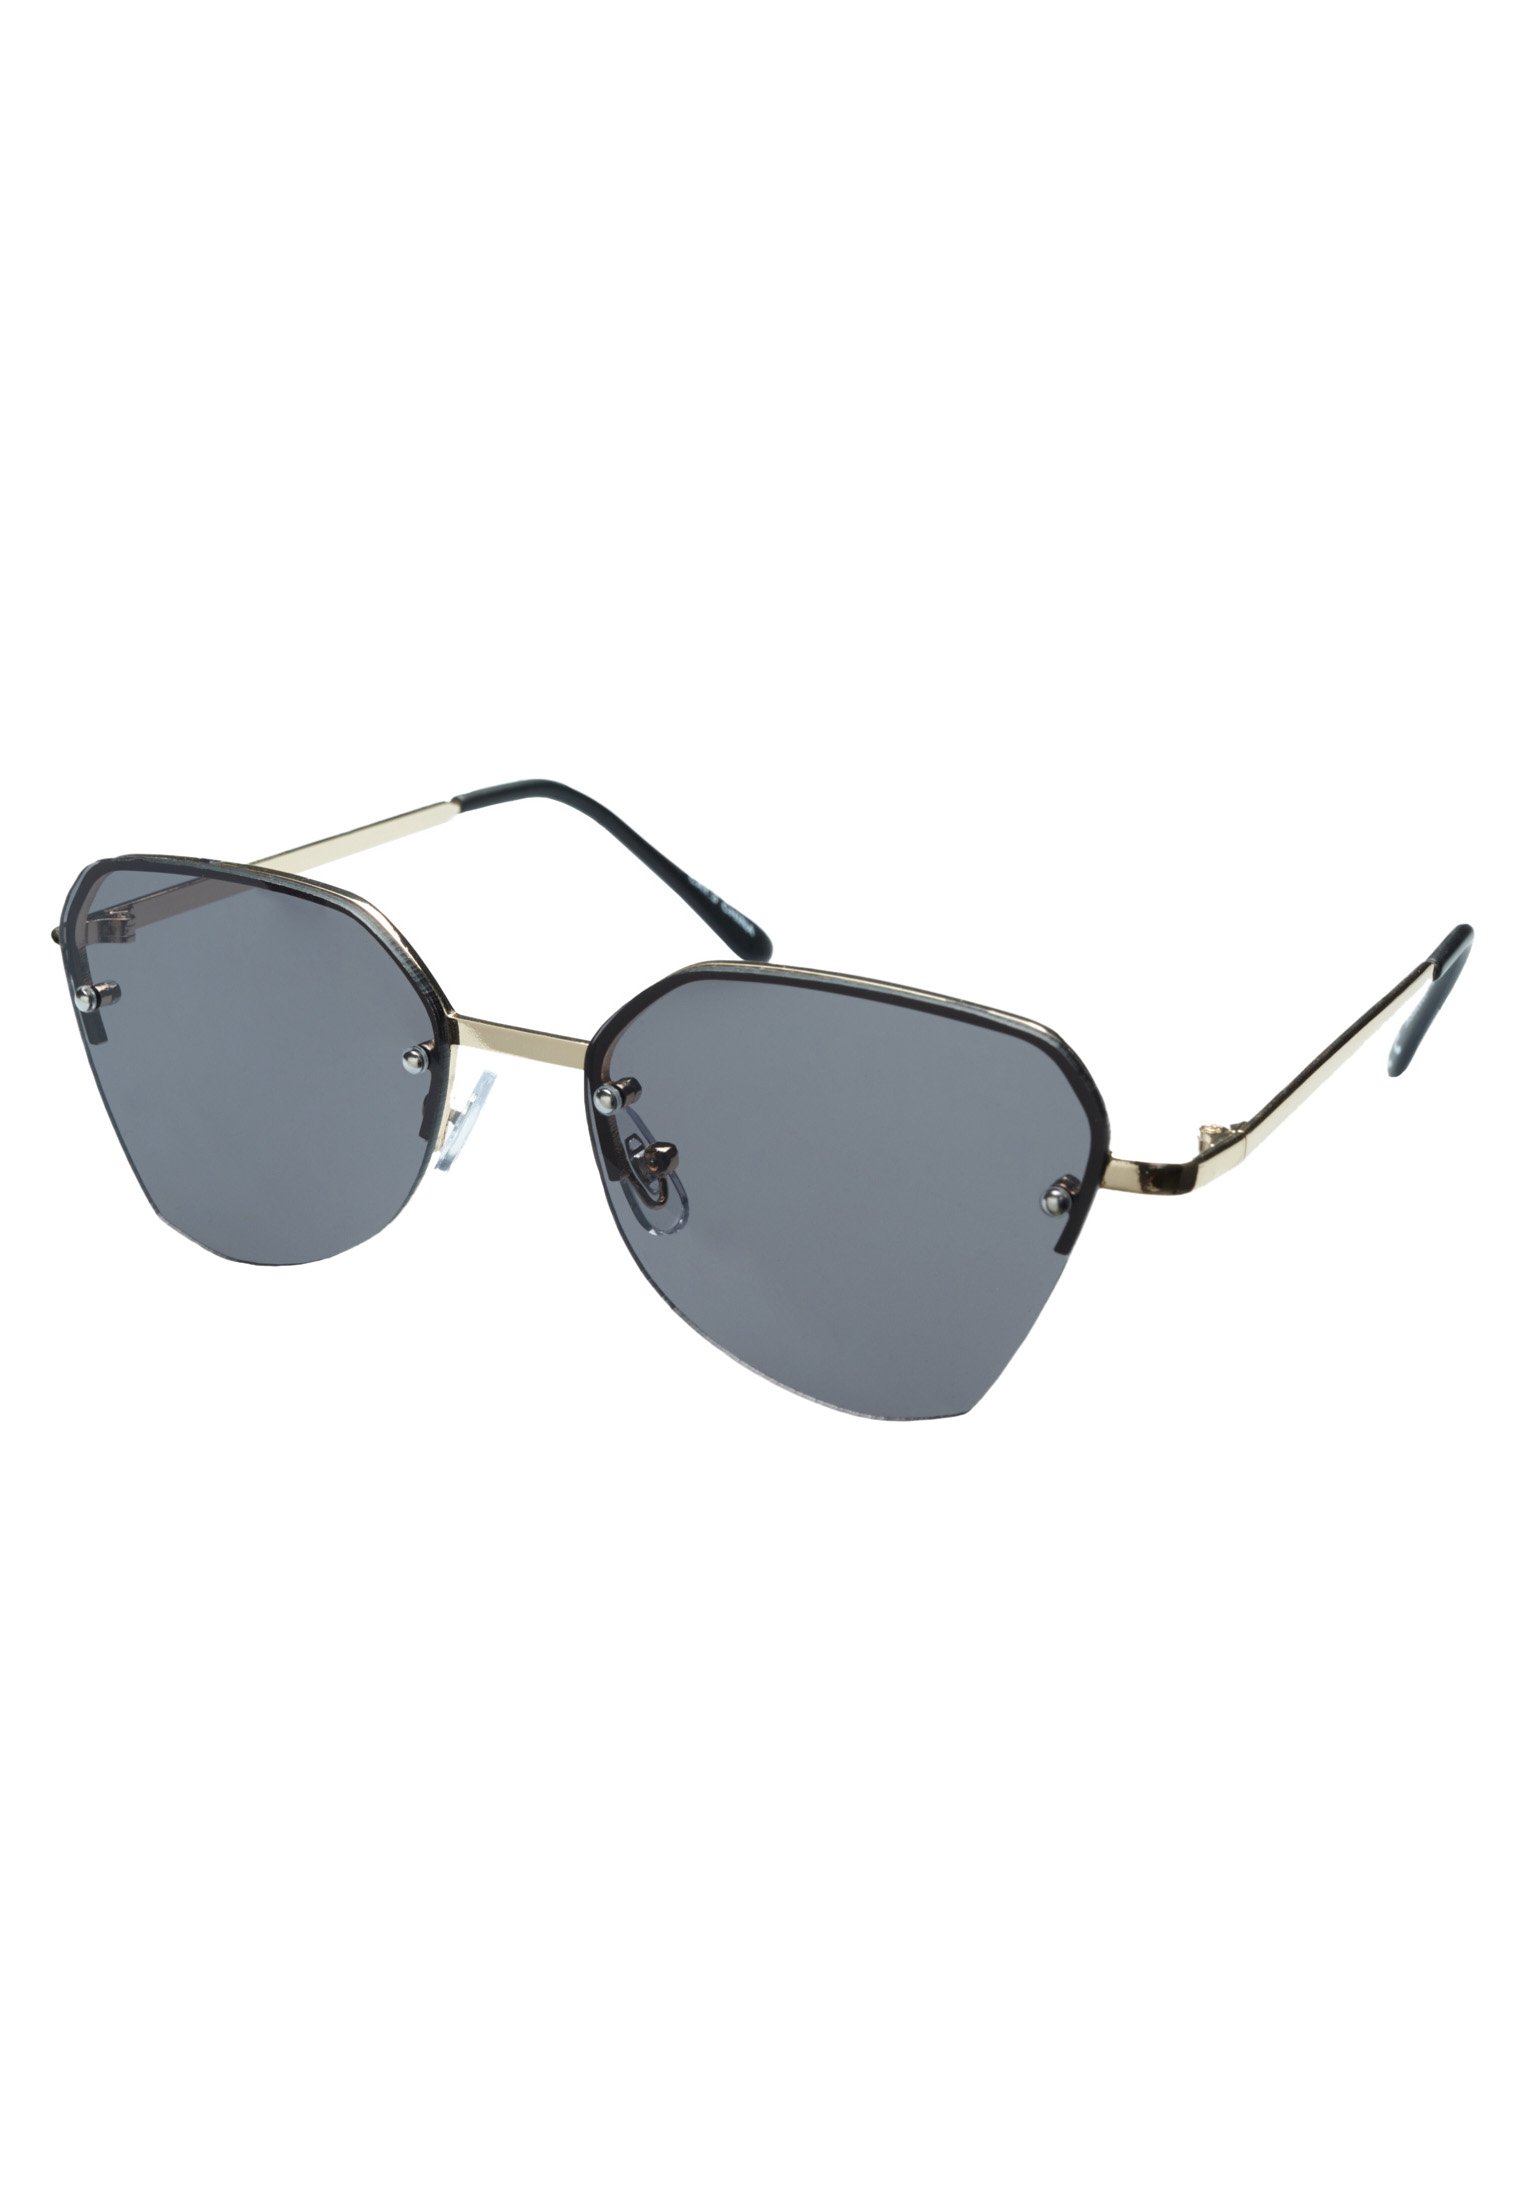 Icon Eyewear B-FLY - Sonnenbrille - pale gold / grey/neonorange